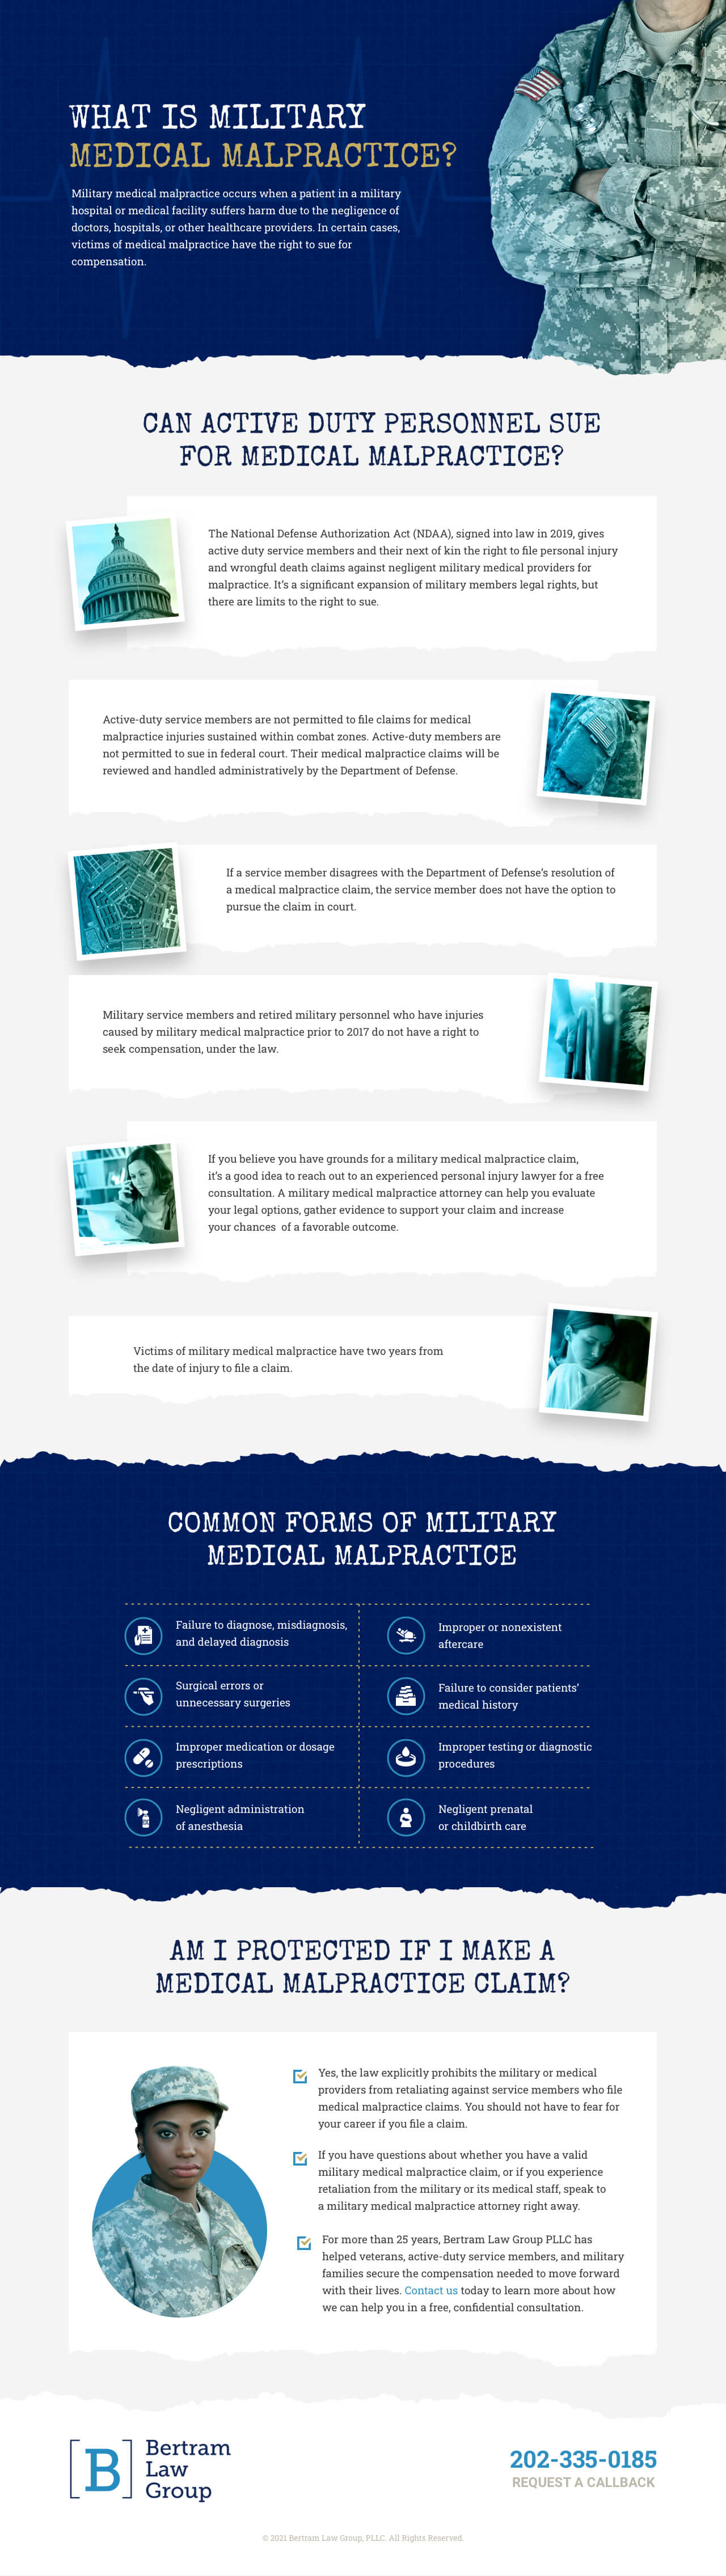 military-medical-malpractice-infographic-Bertnam-Law_Group.jpg  by bertramlawgroup